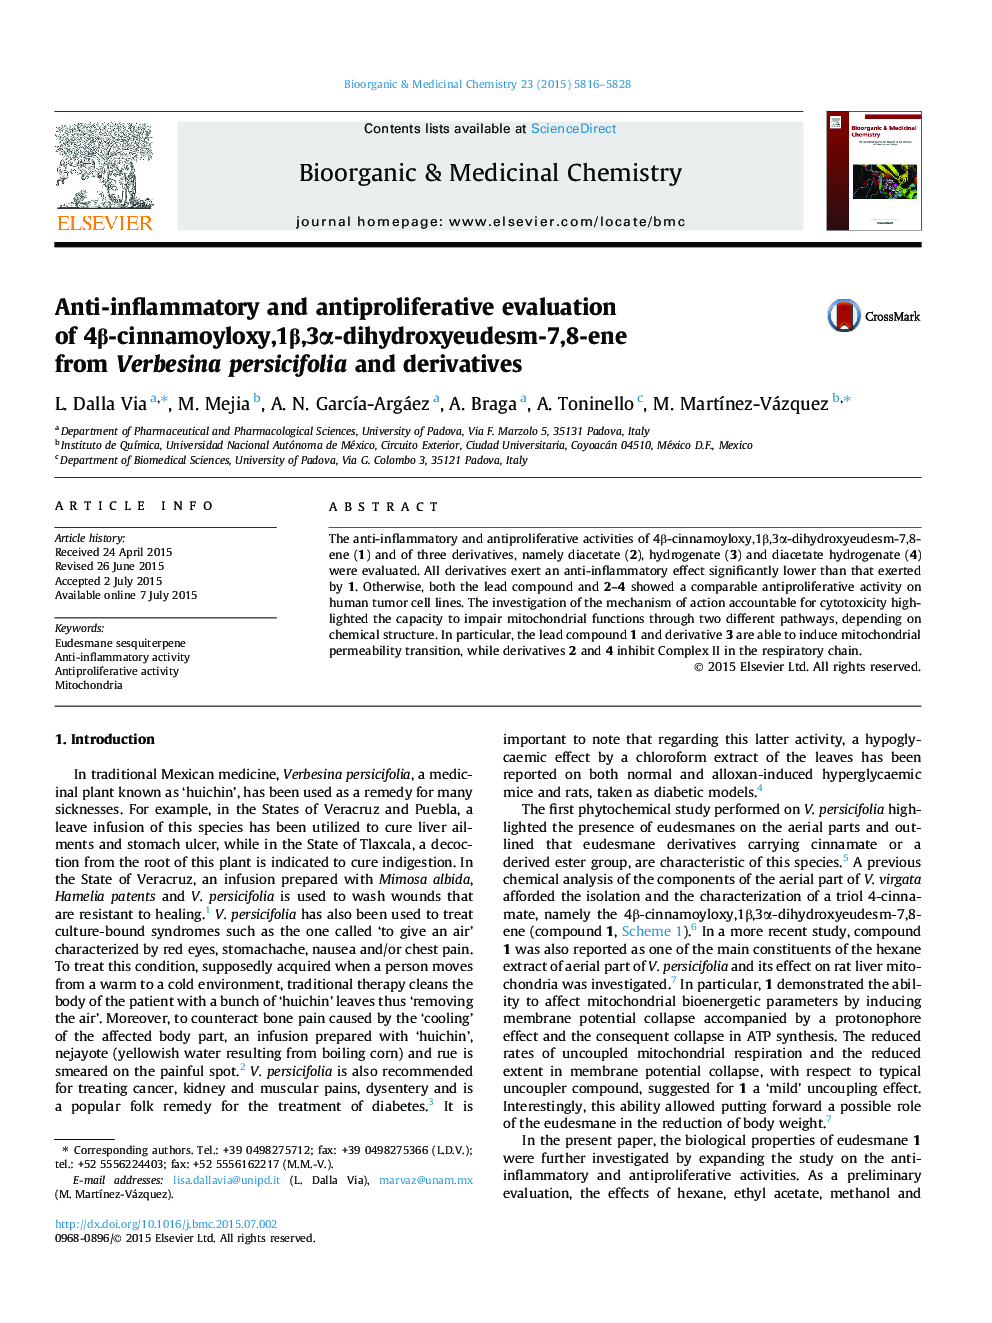 Anti-inflammatory and antiproliferative evaluation of 4Î²-cinnamoyloxy,1Î²,3Î±-dihydroxyeudesm-7,8-ene from Verbesina persicifolia and derivatives